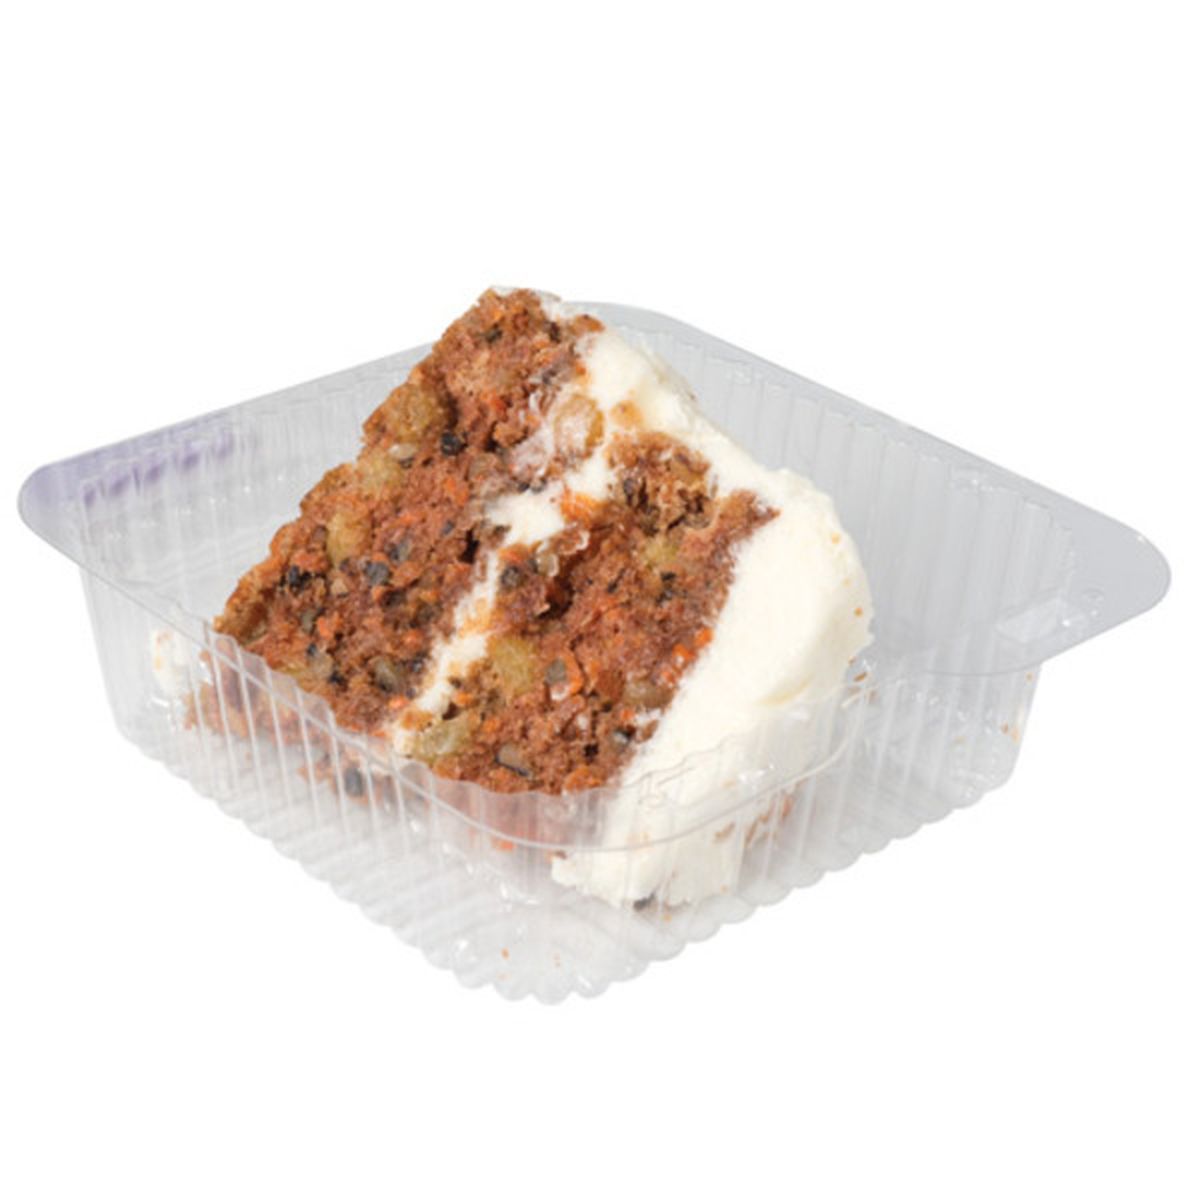 Calories in Wegmans Ultimate Carrot Cake Slice